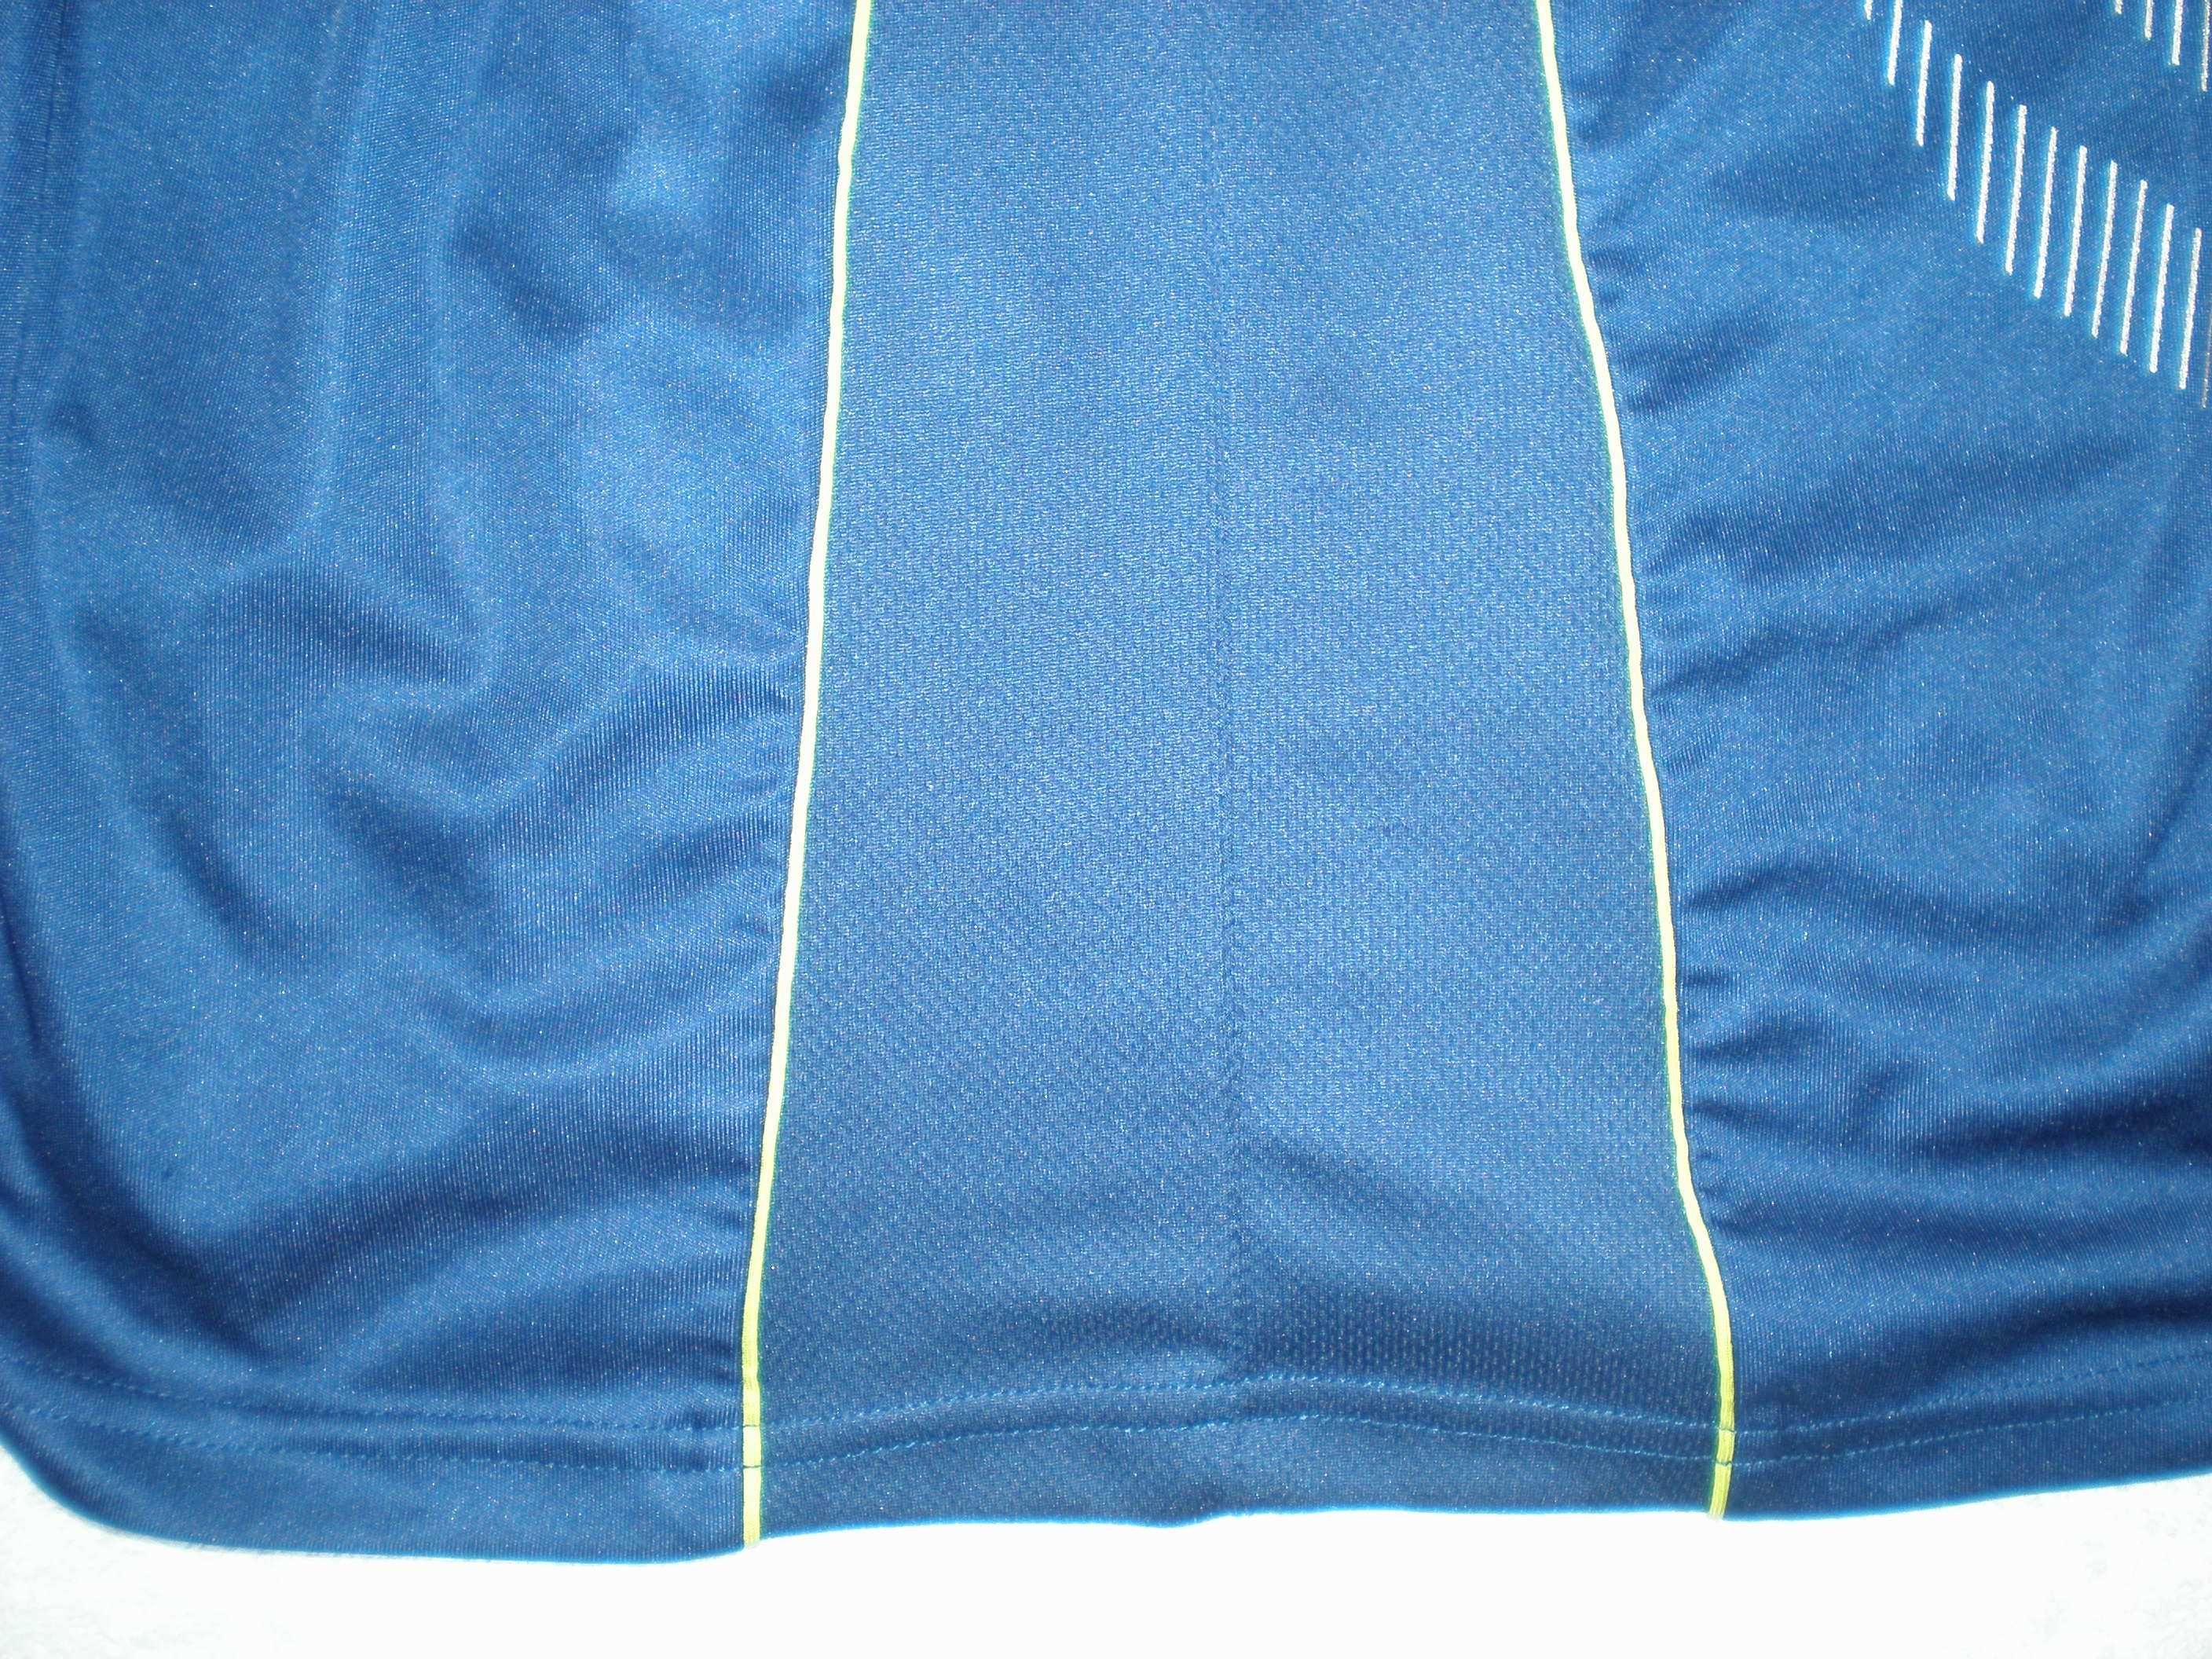 Футболка Osaga dry tec р. 48-50 темно-синего цвета.